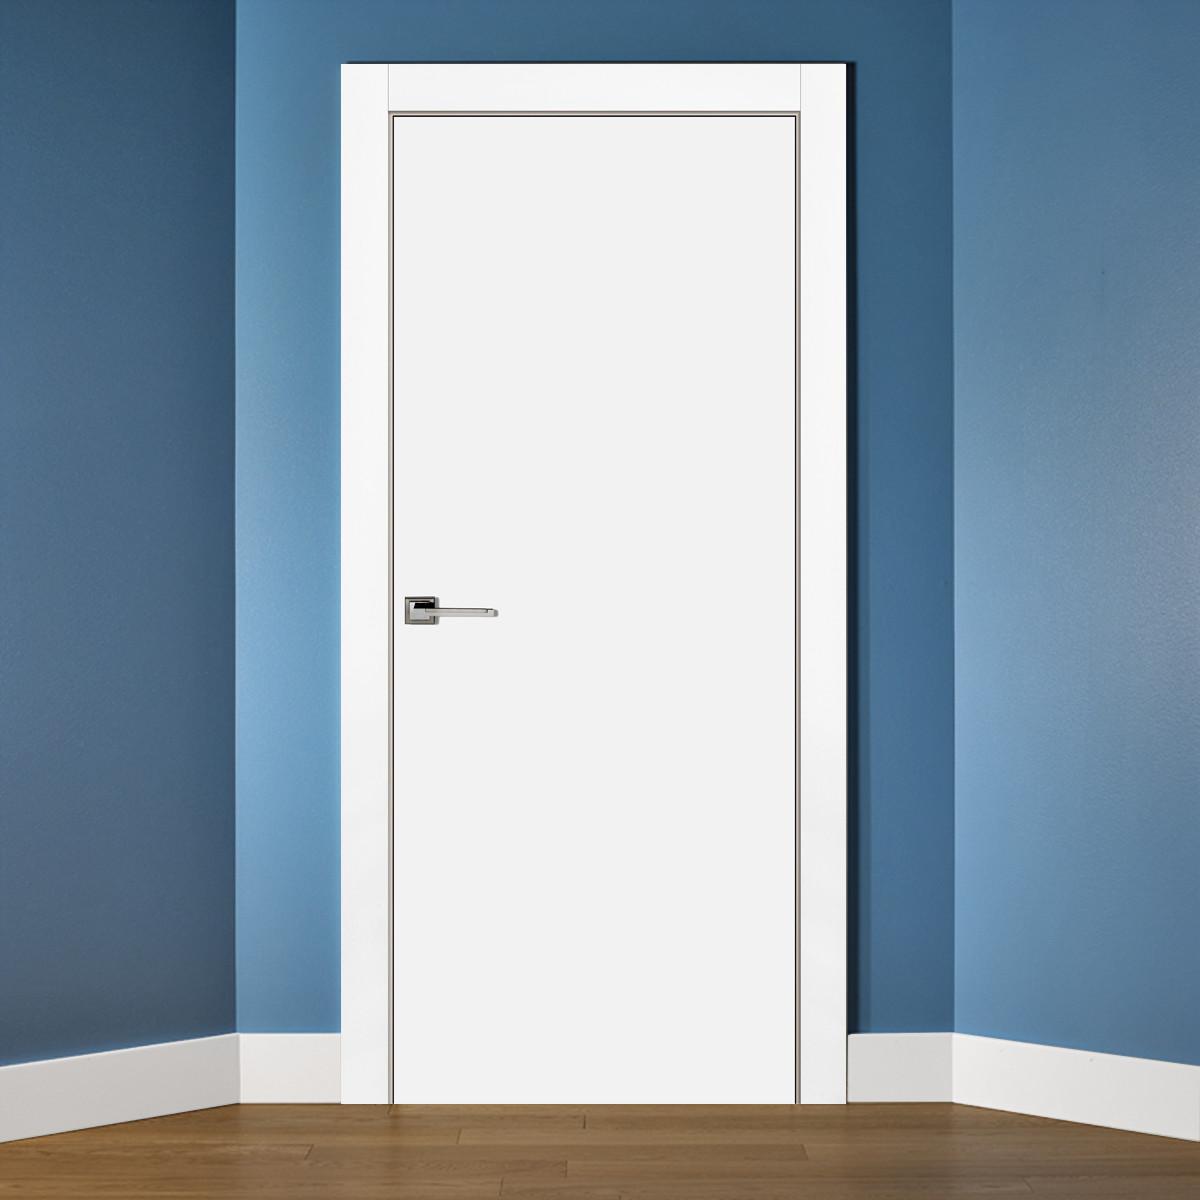 Ergonomics in door design: principles of comfort and accessibility